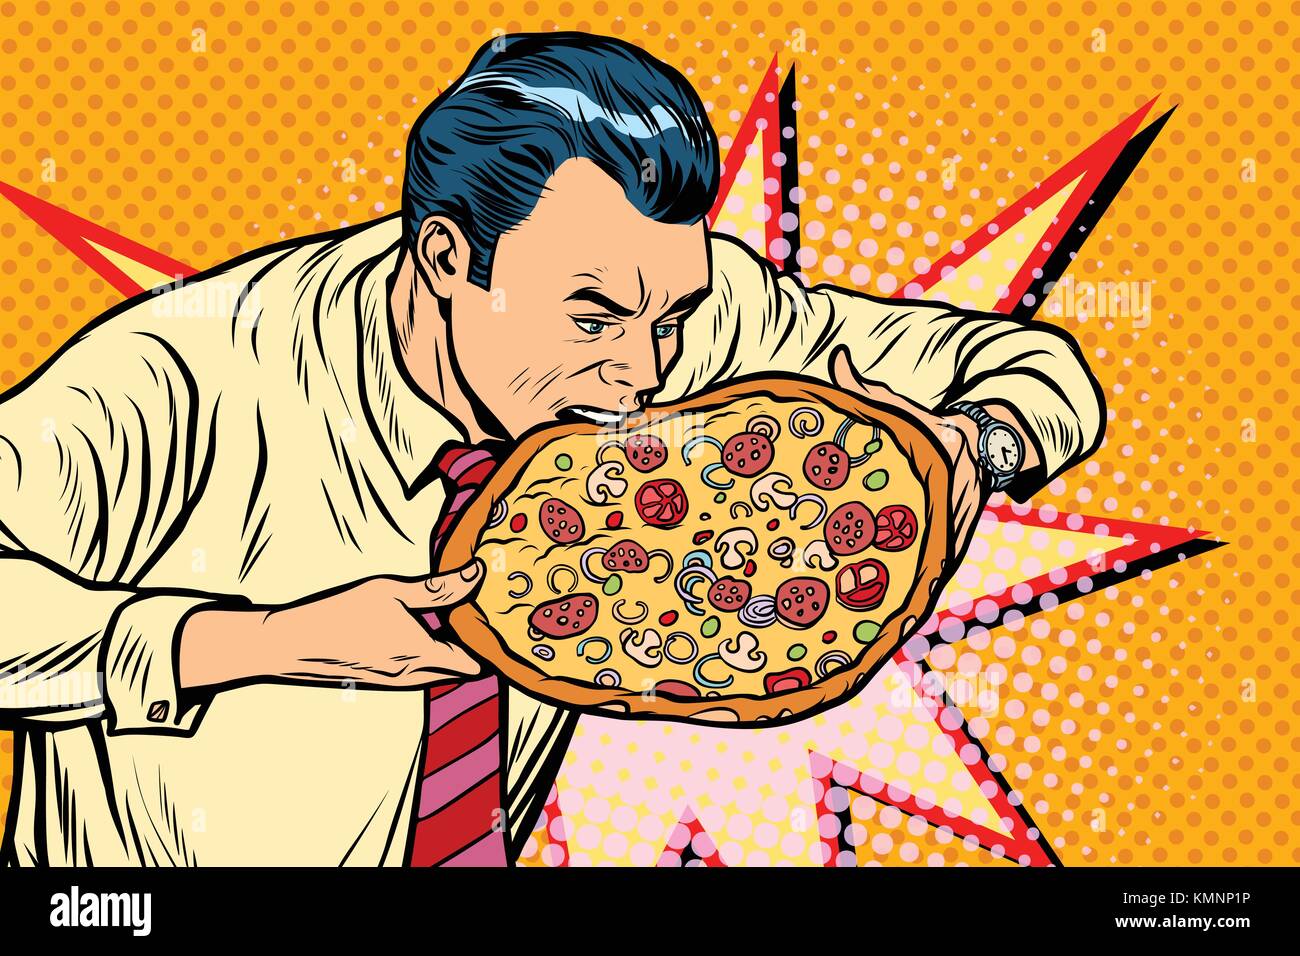 man bites pizza. Pop art retro vector illustration Image & Art - Alamy